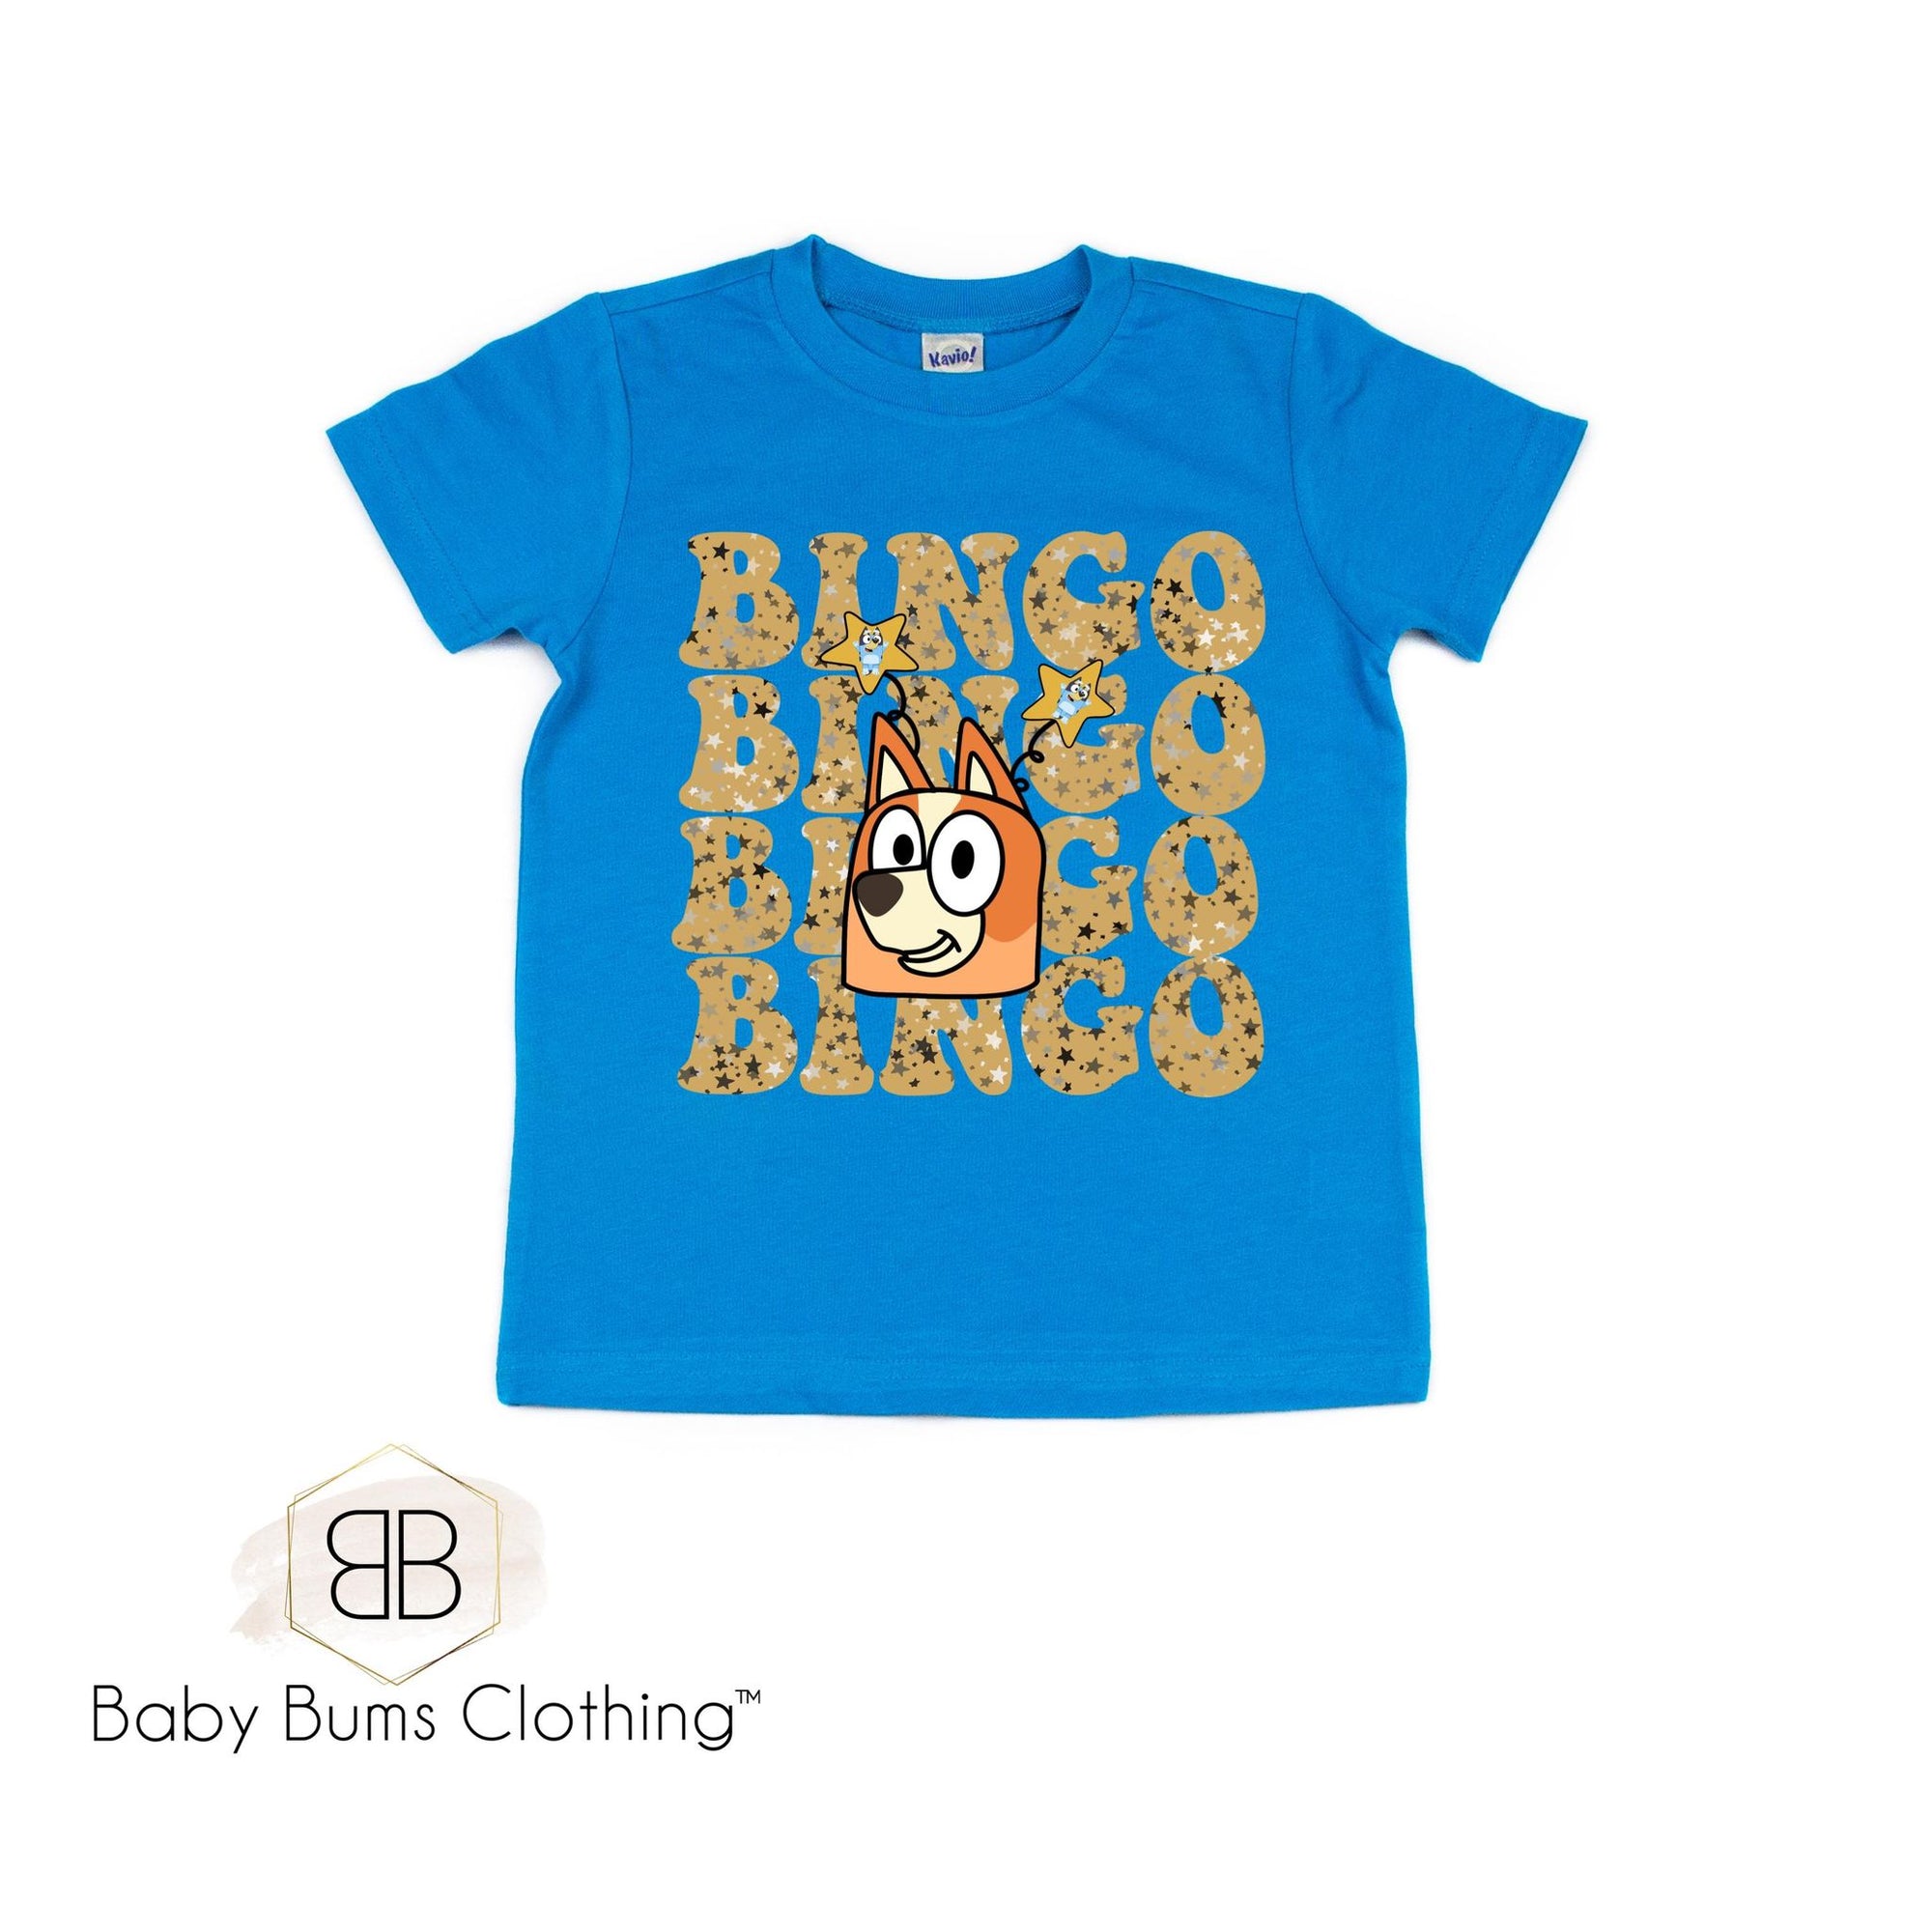 BB BINGO T-SHIRT - Baby Bums Clothing 